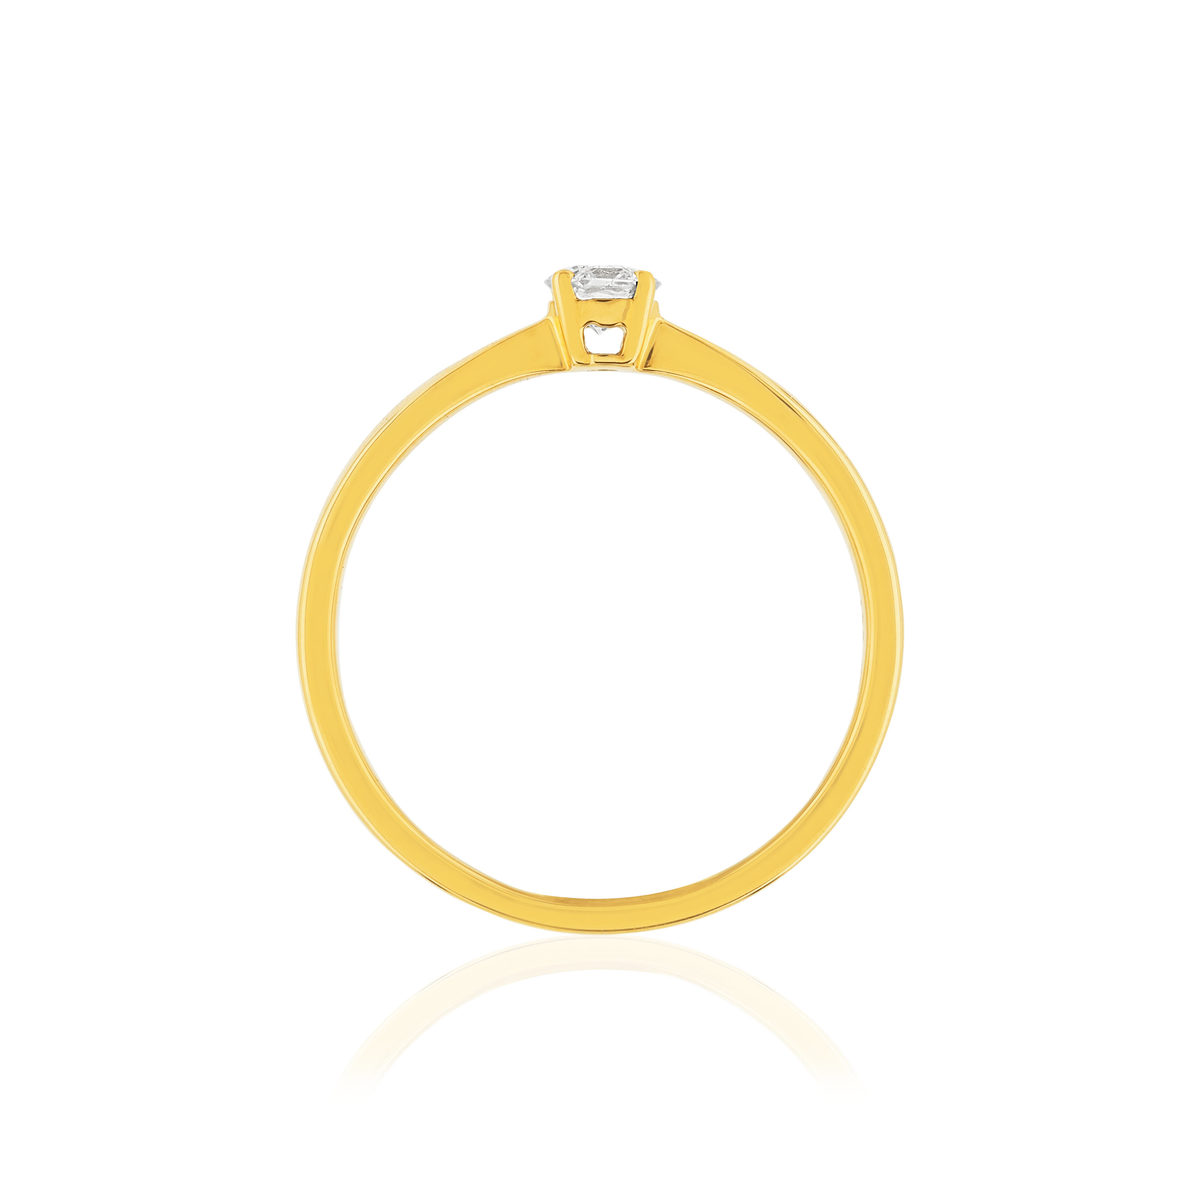 Solitaire or jaune 750 diamant synthétique 0.18 carat - vue 2